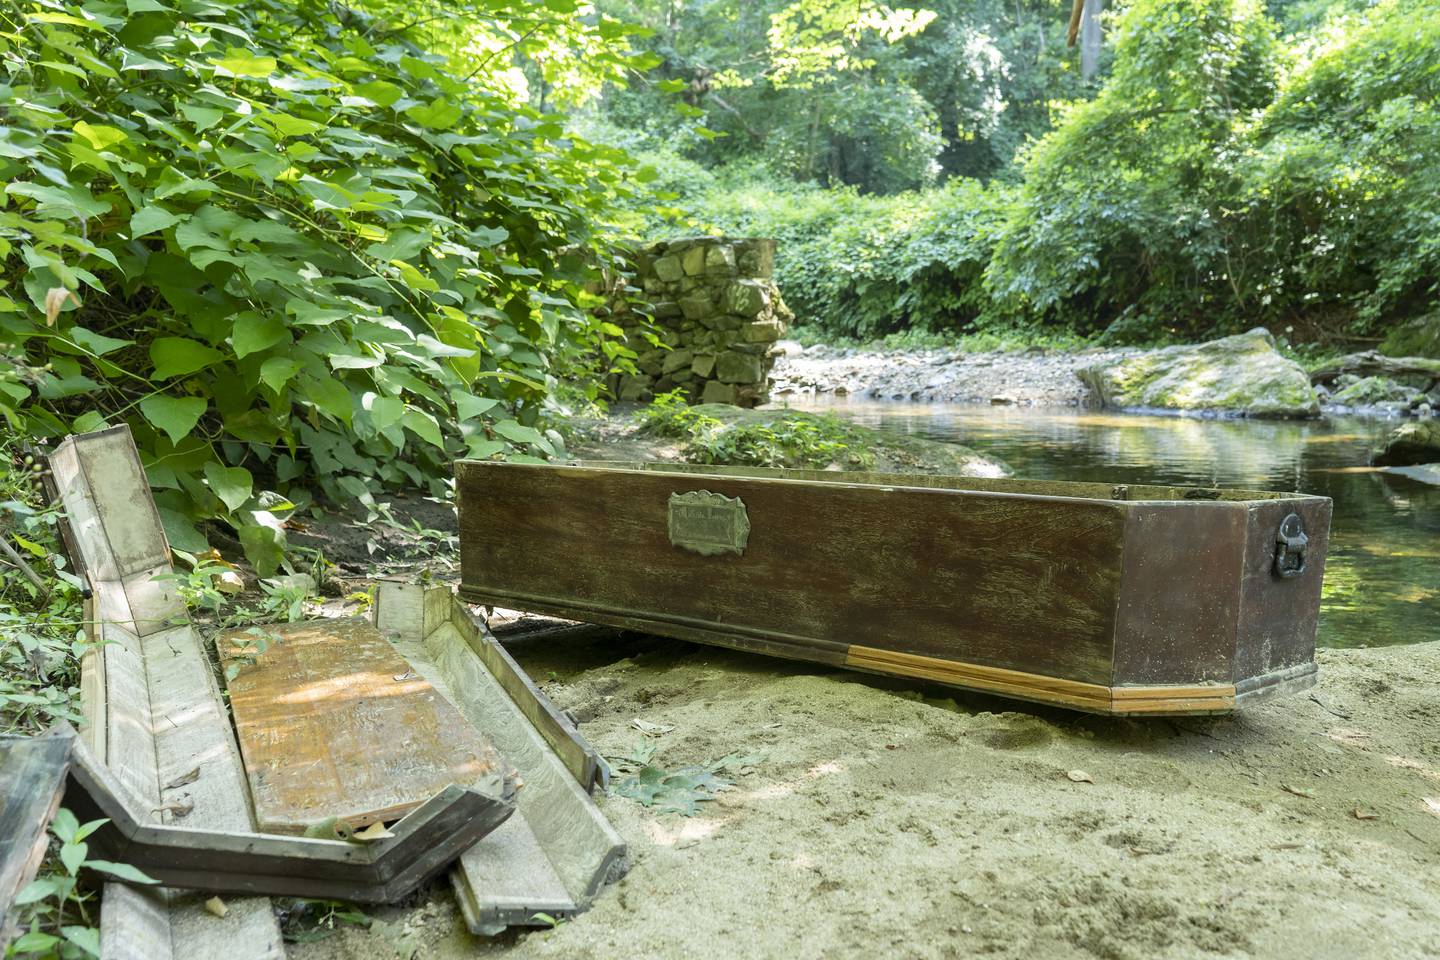 The casket rests next to the stream in Wyman Park.